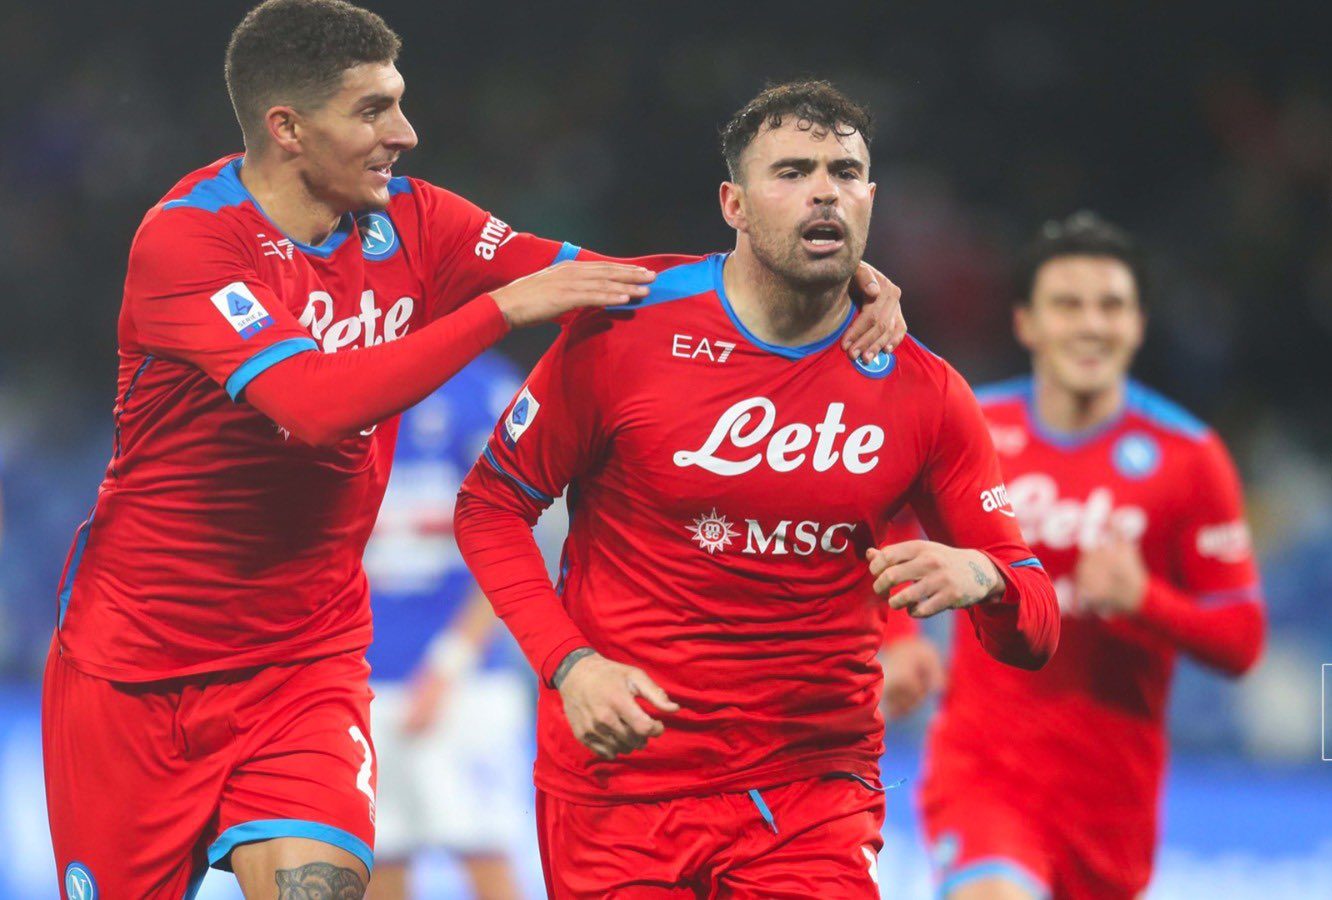 Calcio Napoli: Un gol di Petagna basta per superare la Sampdoria 1-0